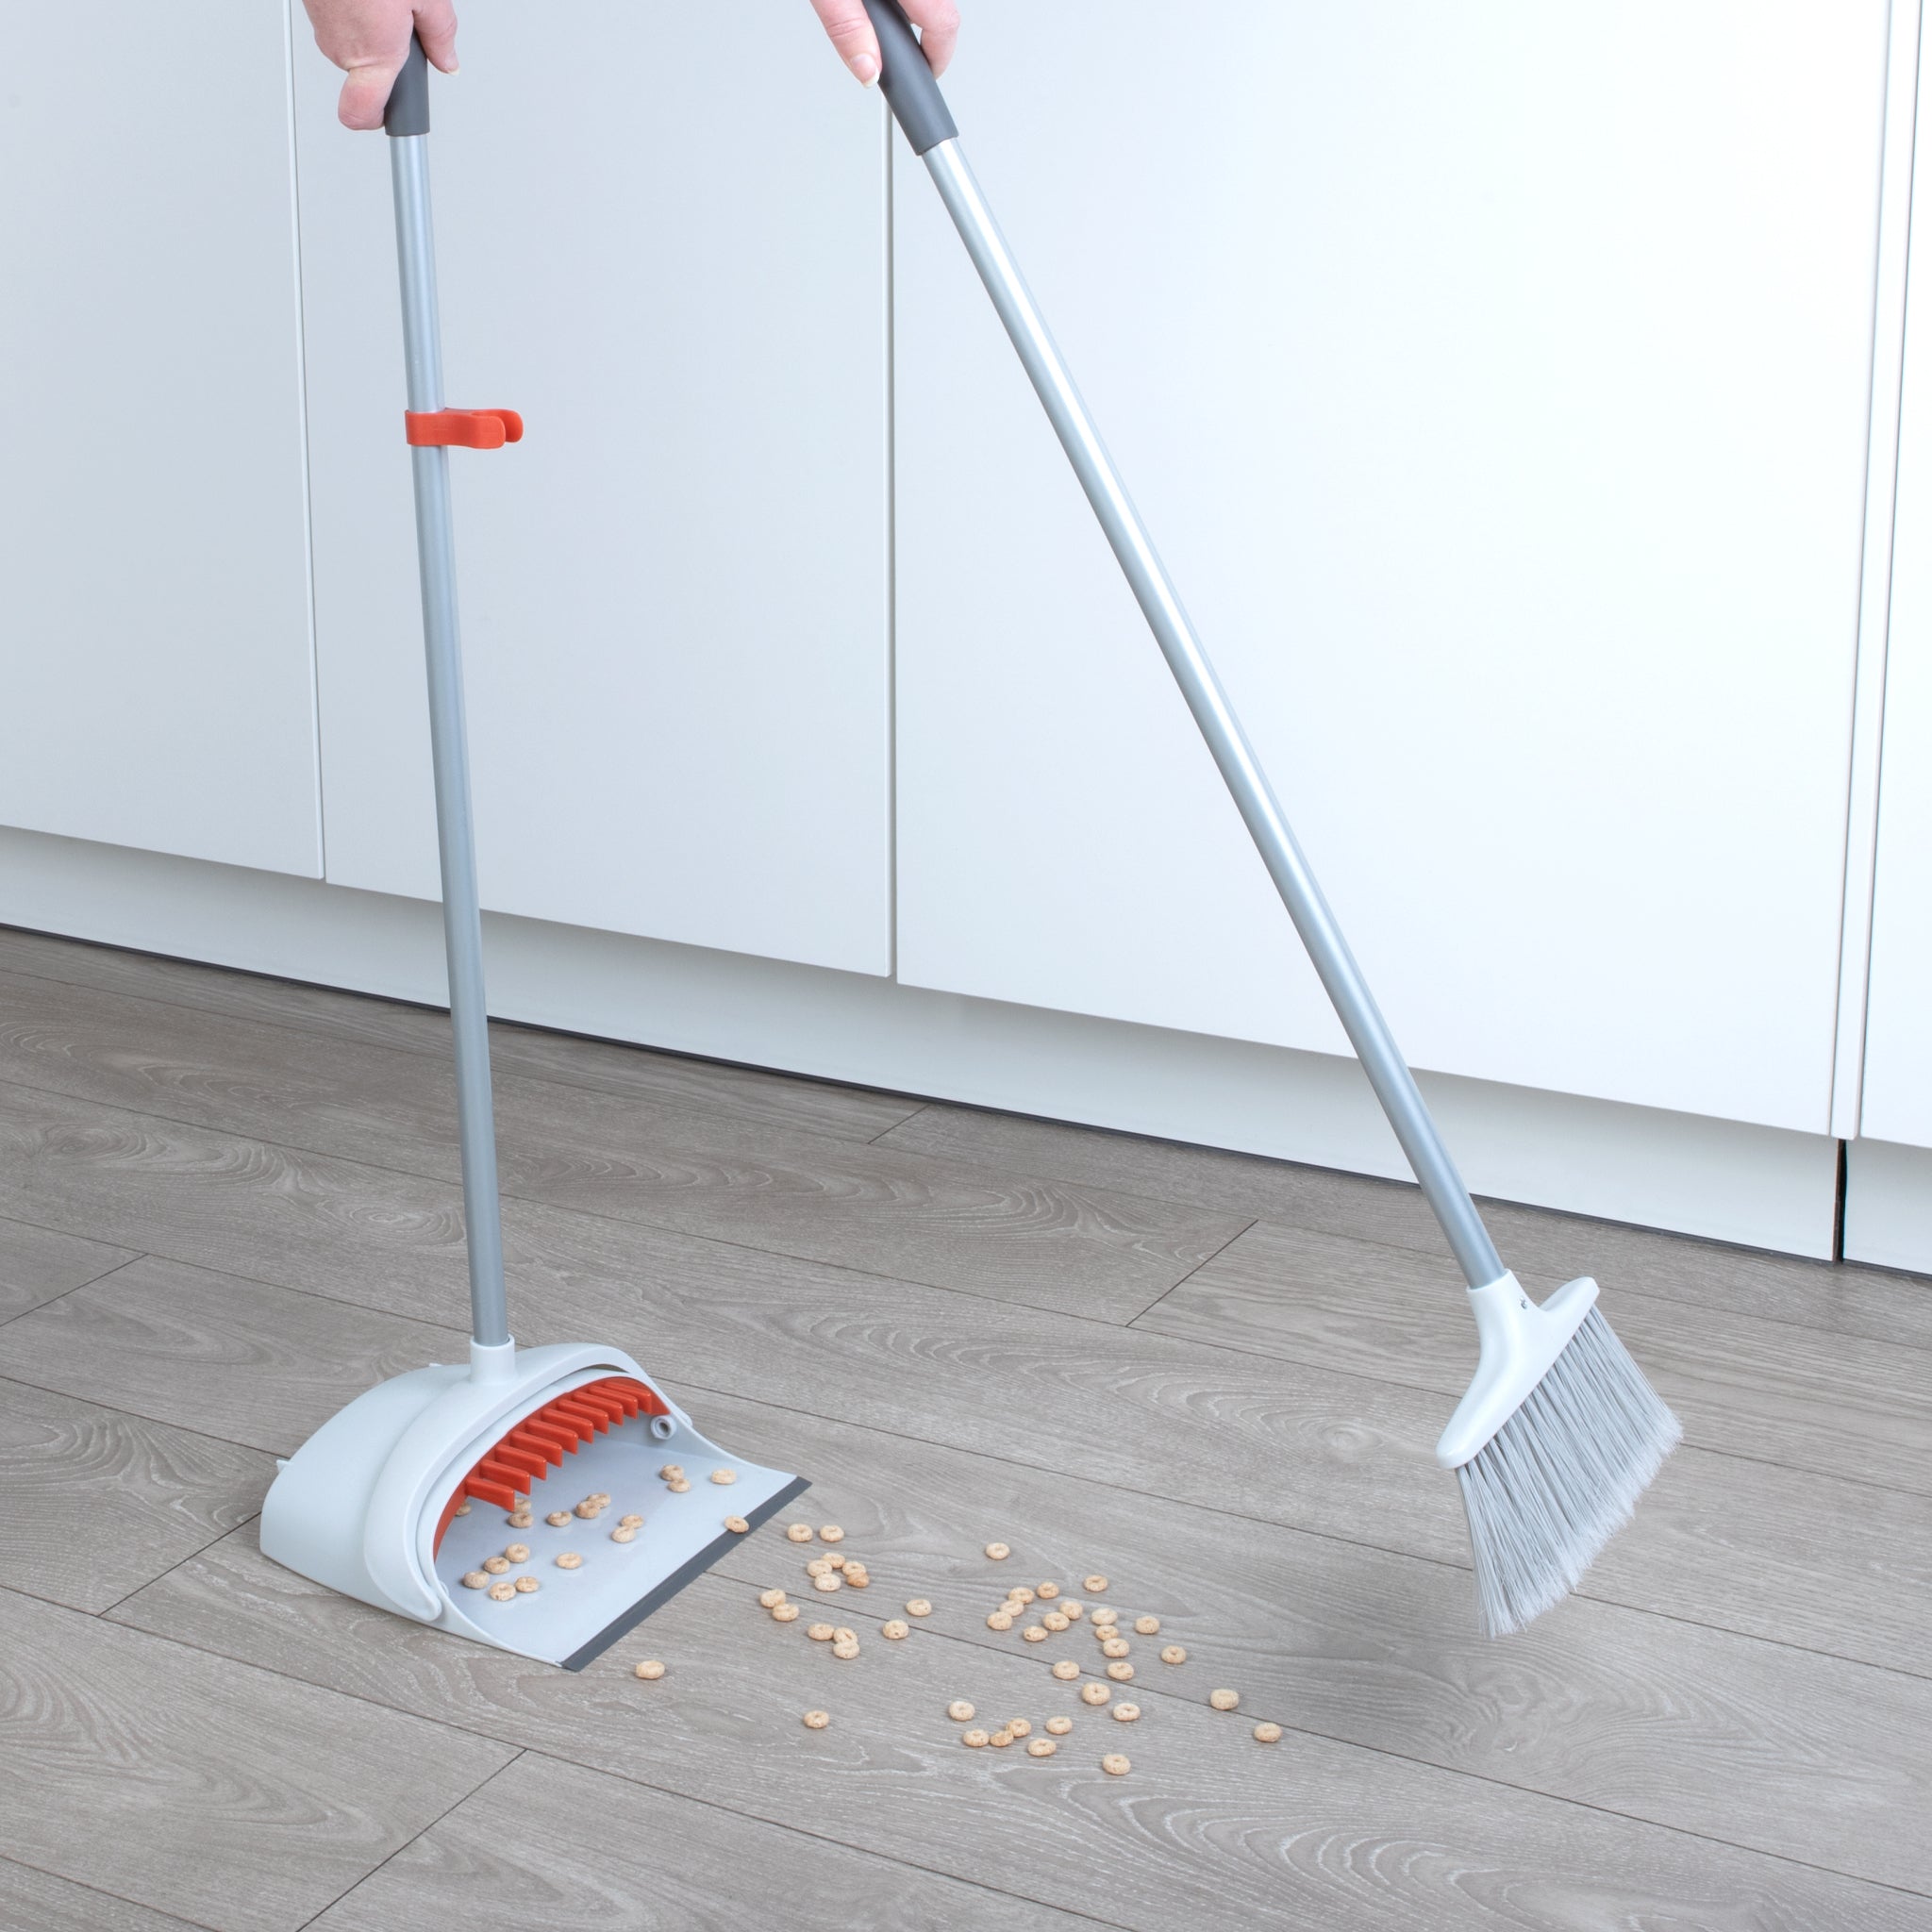 https://cdn.shopify.com/s/files/1/2393/7799/products/handheld-dustpan-and-broom-set-smart-design-cleaning-7001301-incrementing-number-541862.jpg?v=1679342305